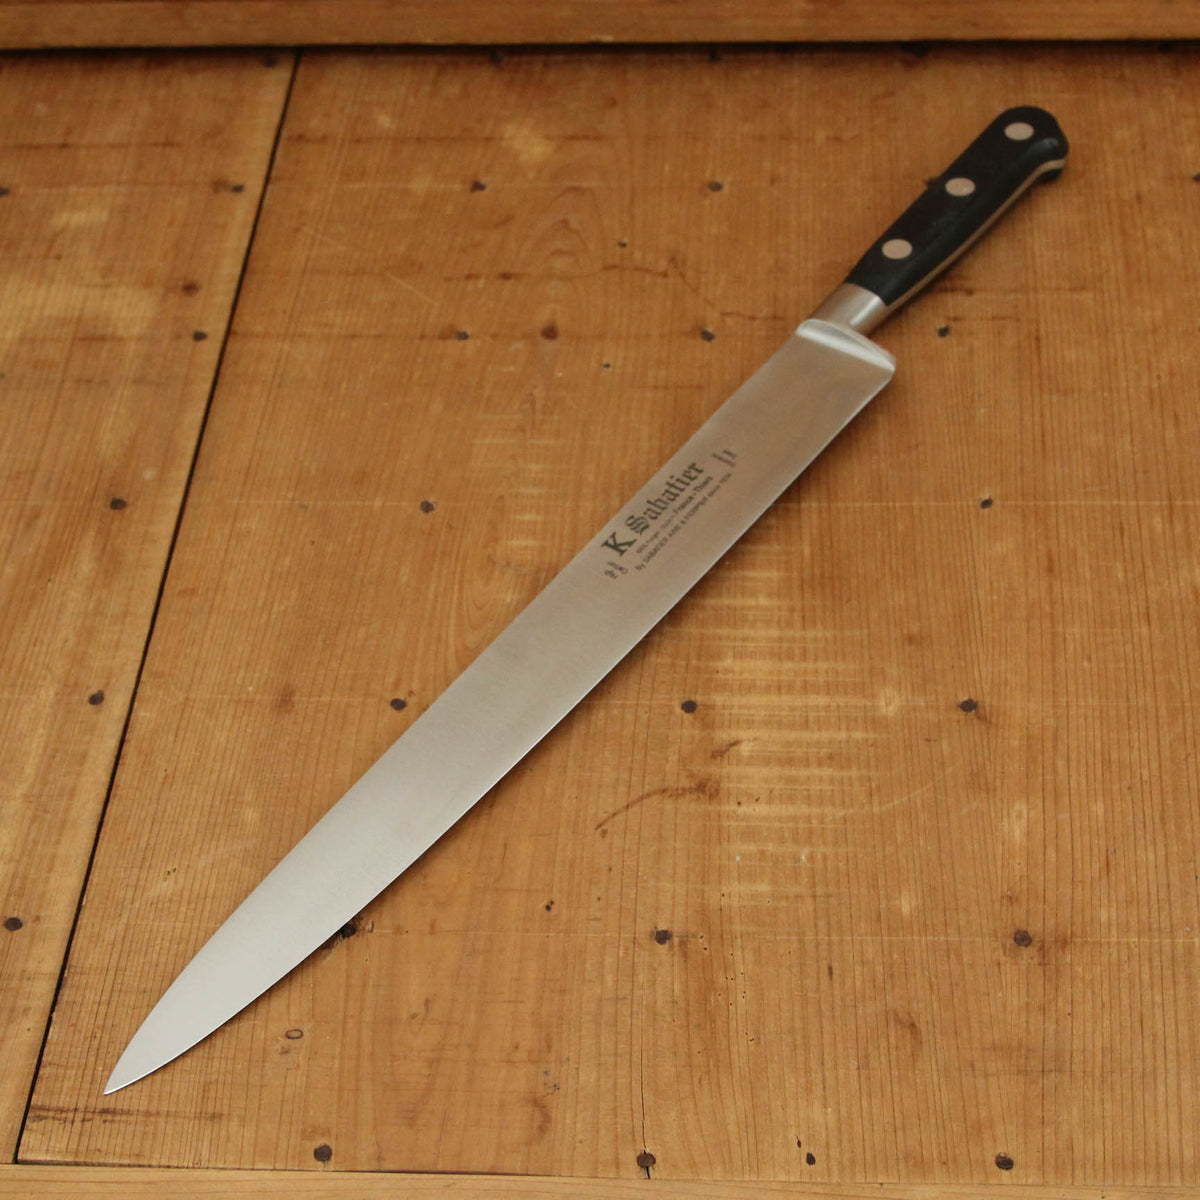 Gift Box - 6 Pieces Elegance : professional kitchen knives set - Sabatier K